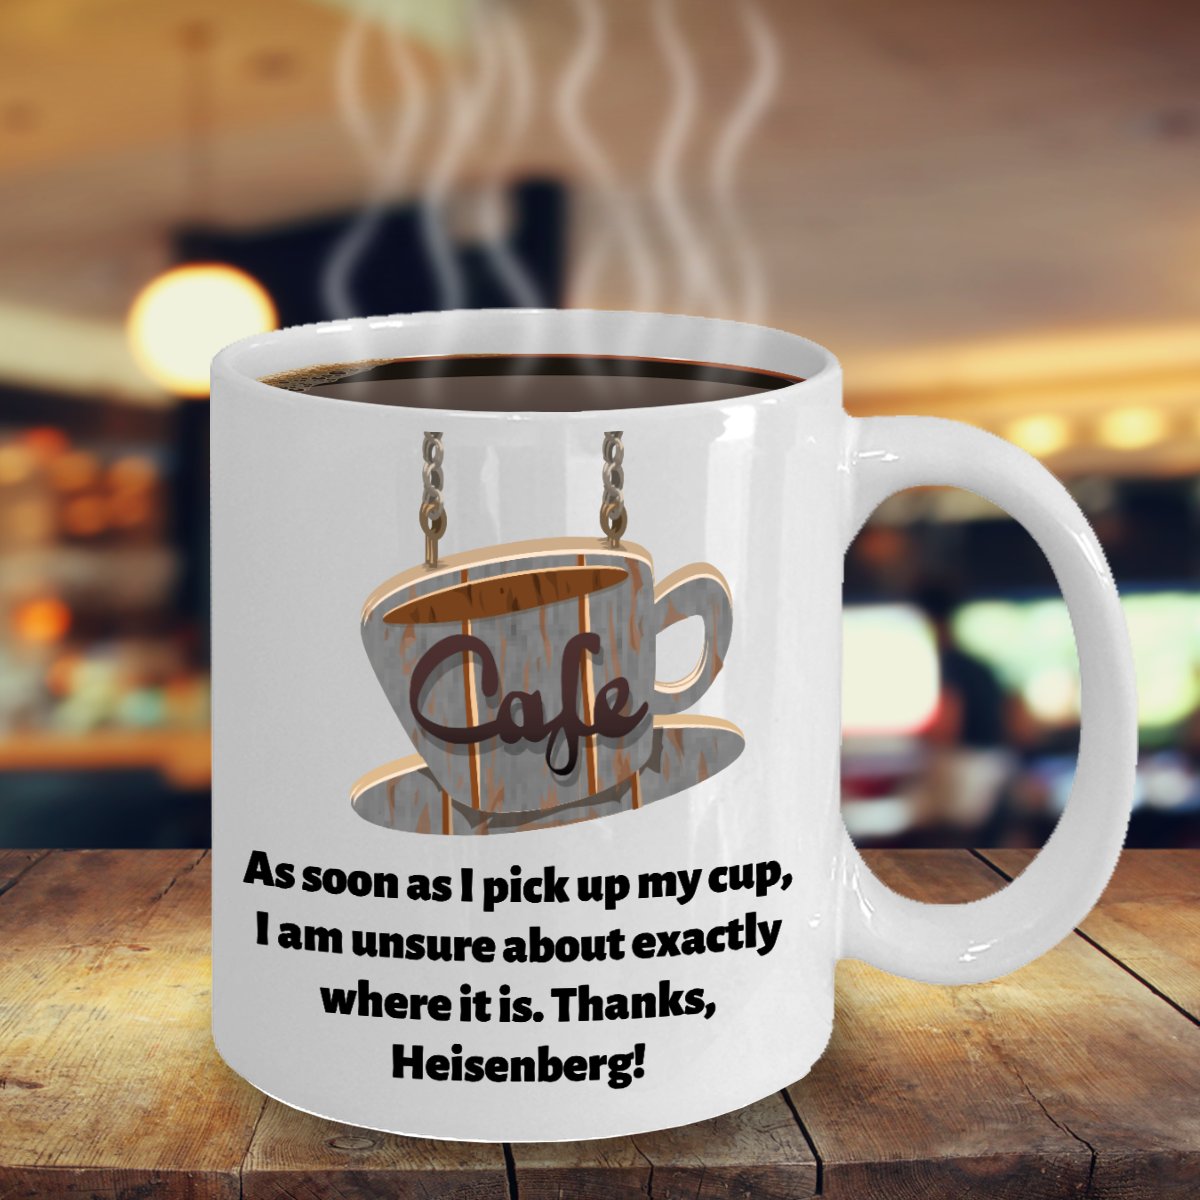 Werner Heisenberg's Birthday